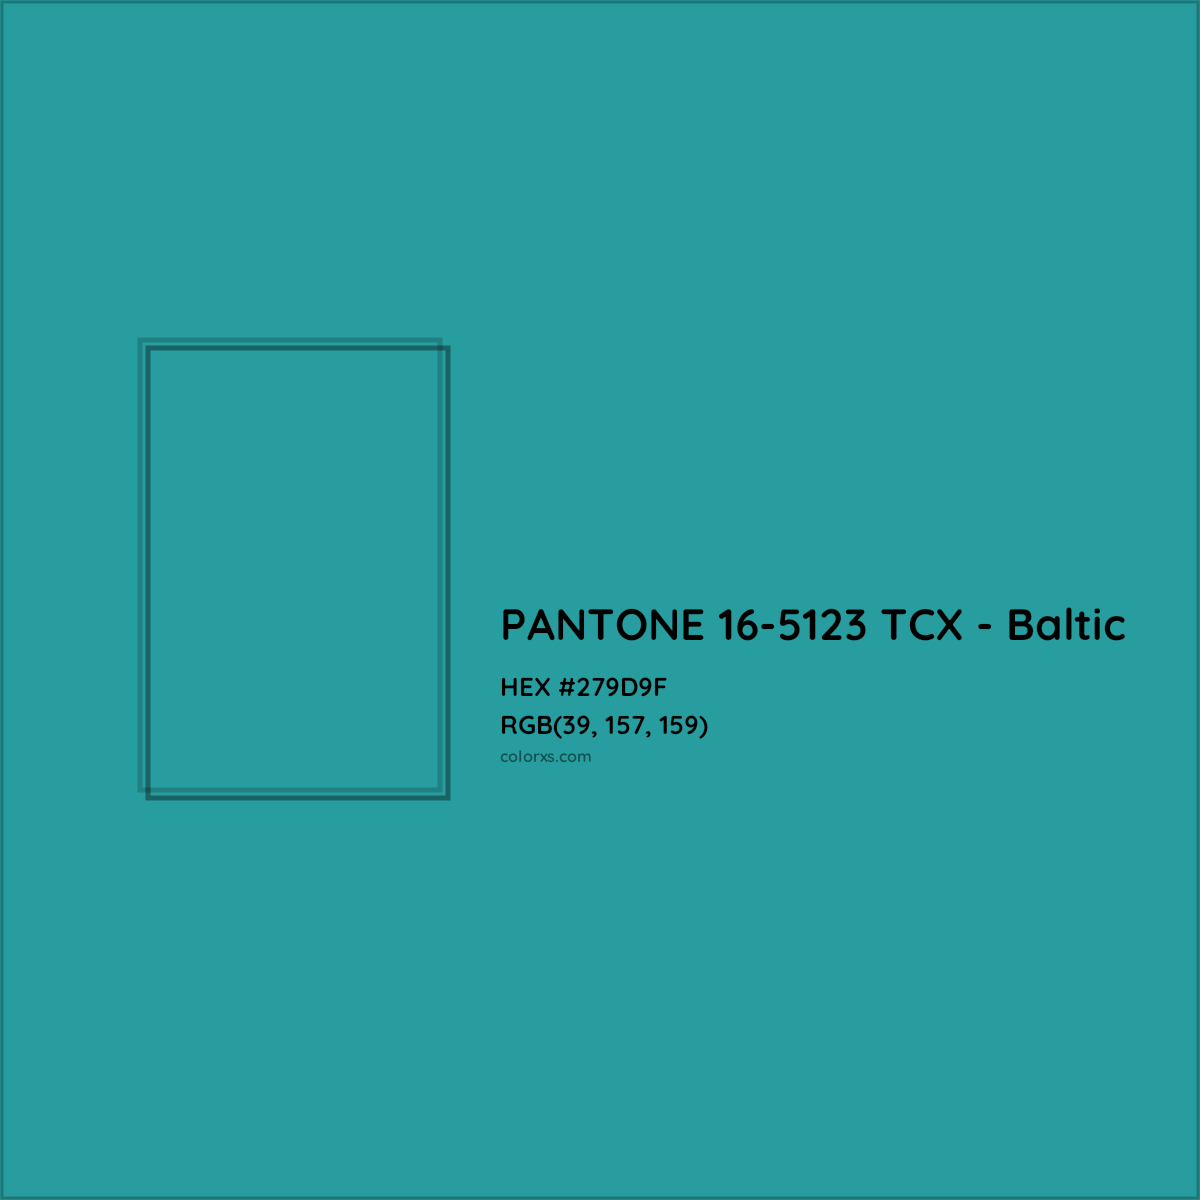 HEX #279D9F PANTONE 16-5123 TCX - Baltic CMS Pantone TCX - Color Code